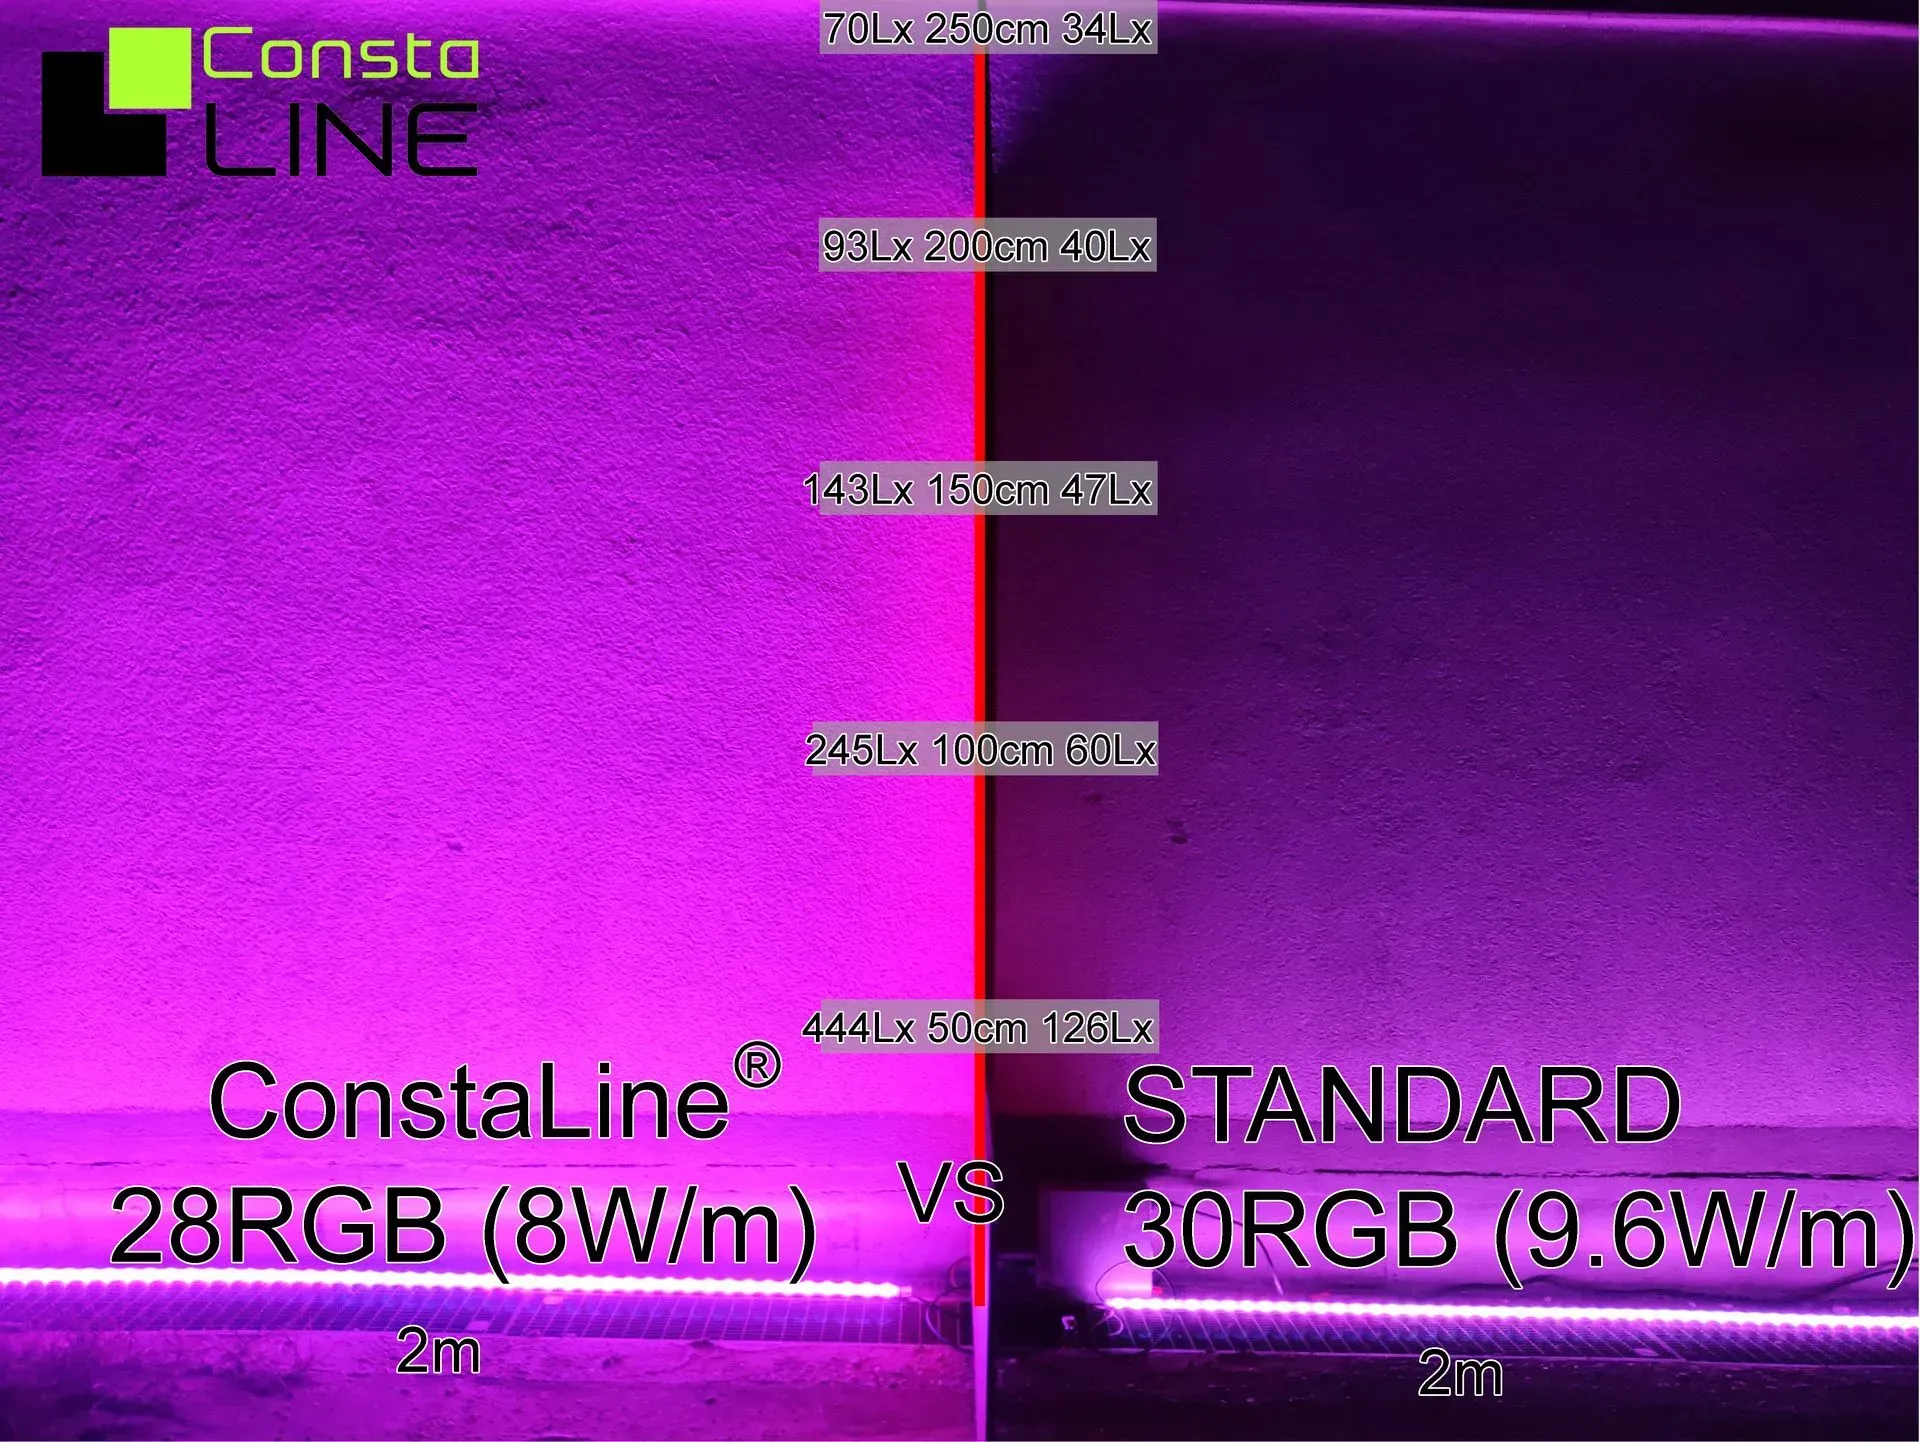 Purple LED light on facade compared